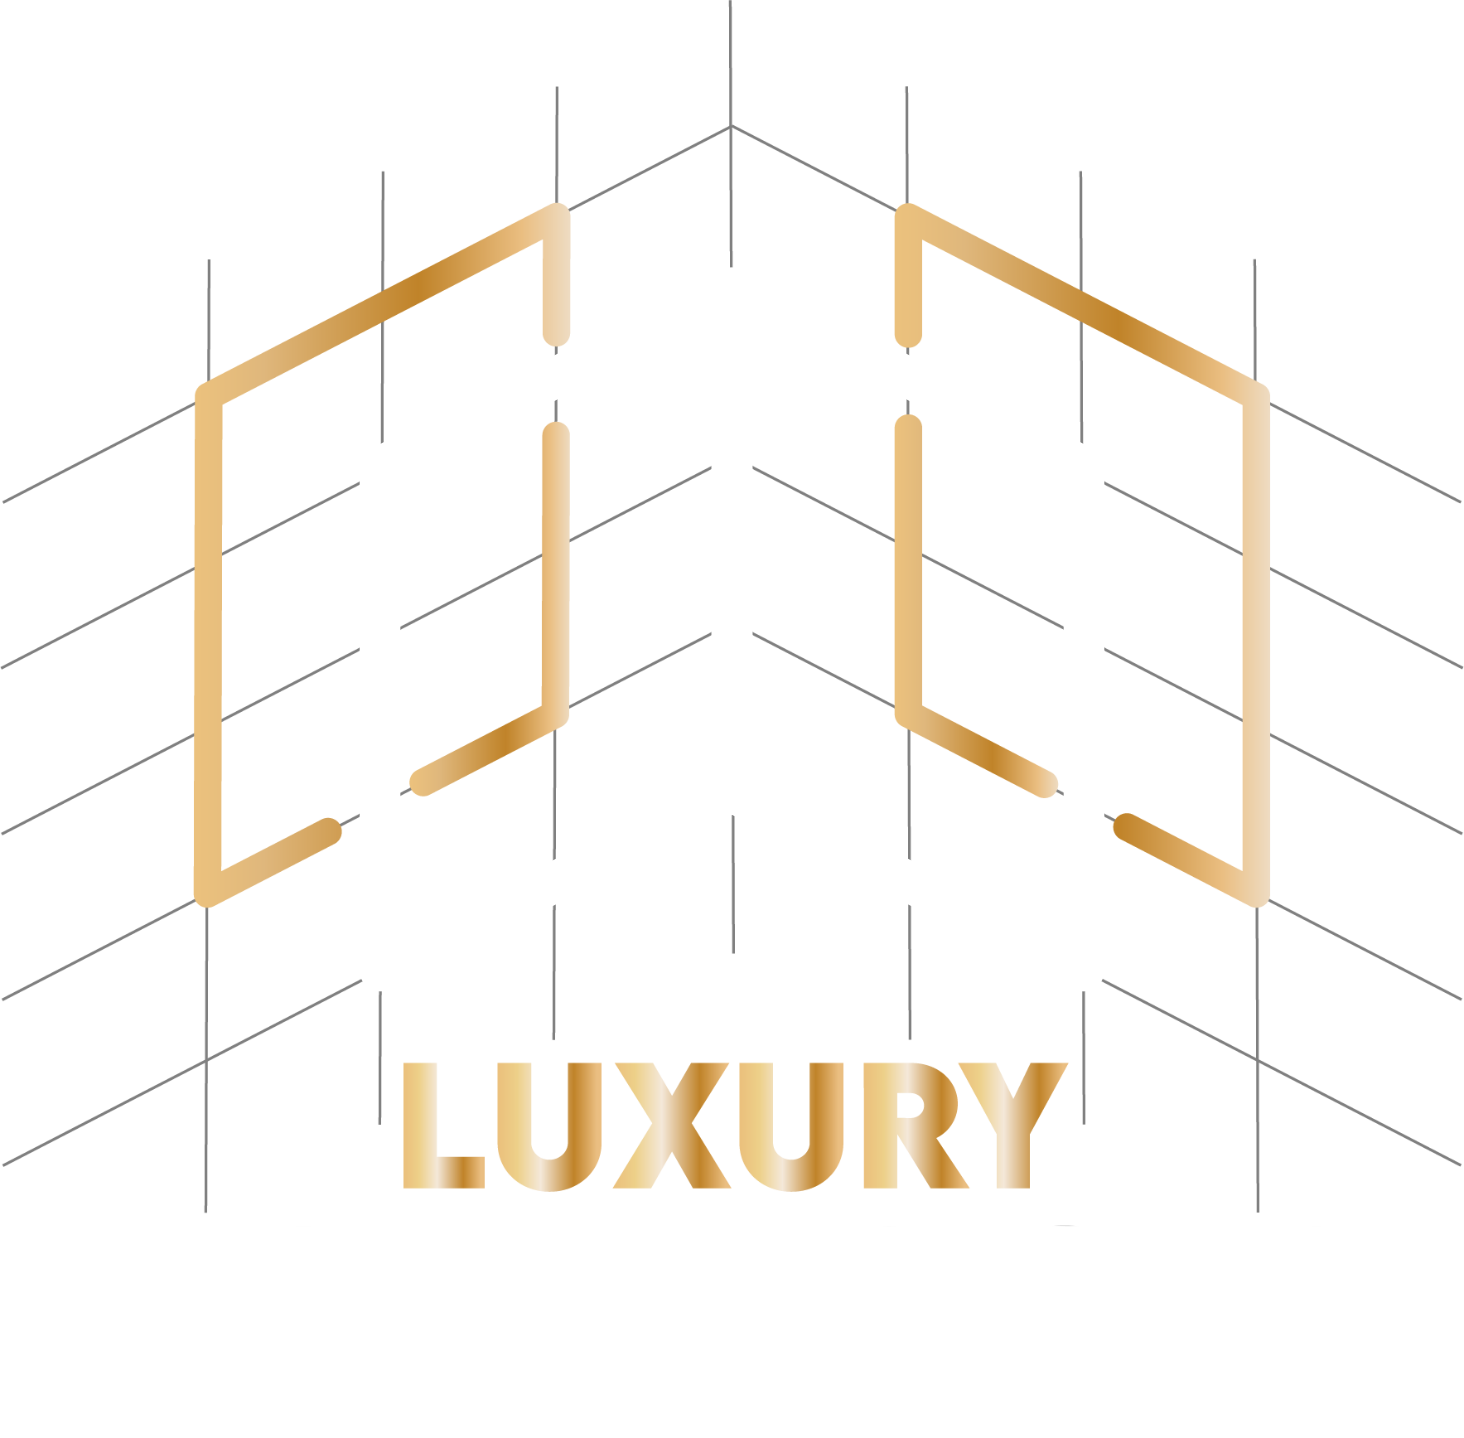 Luxury Wall Designs